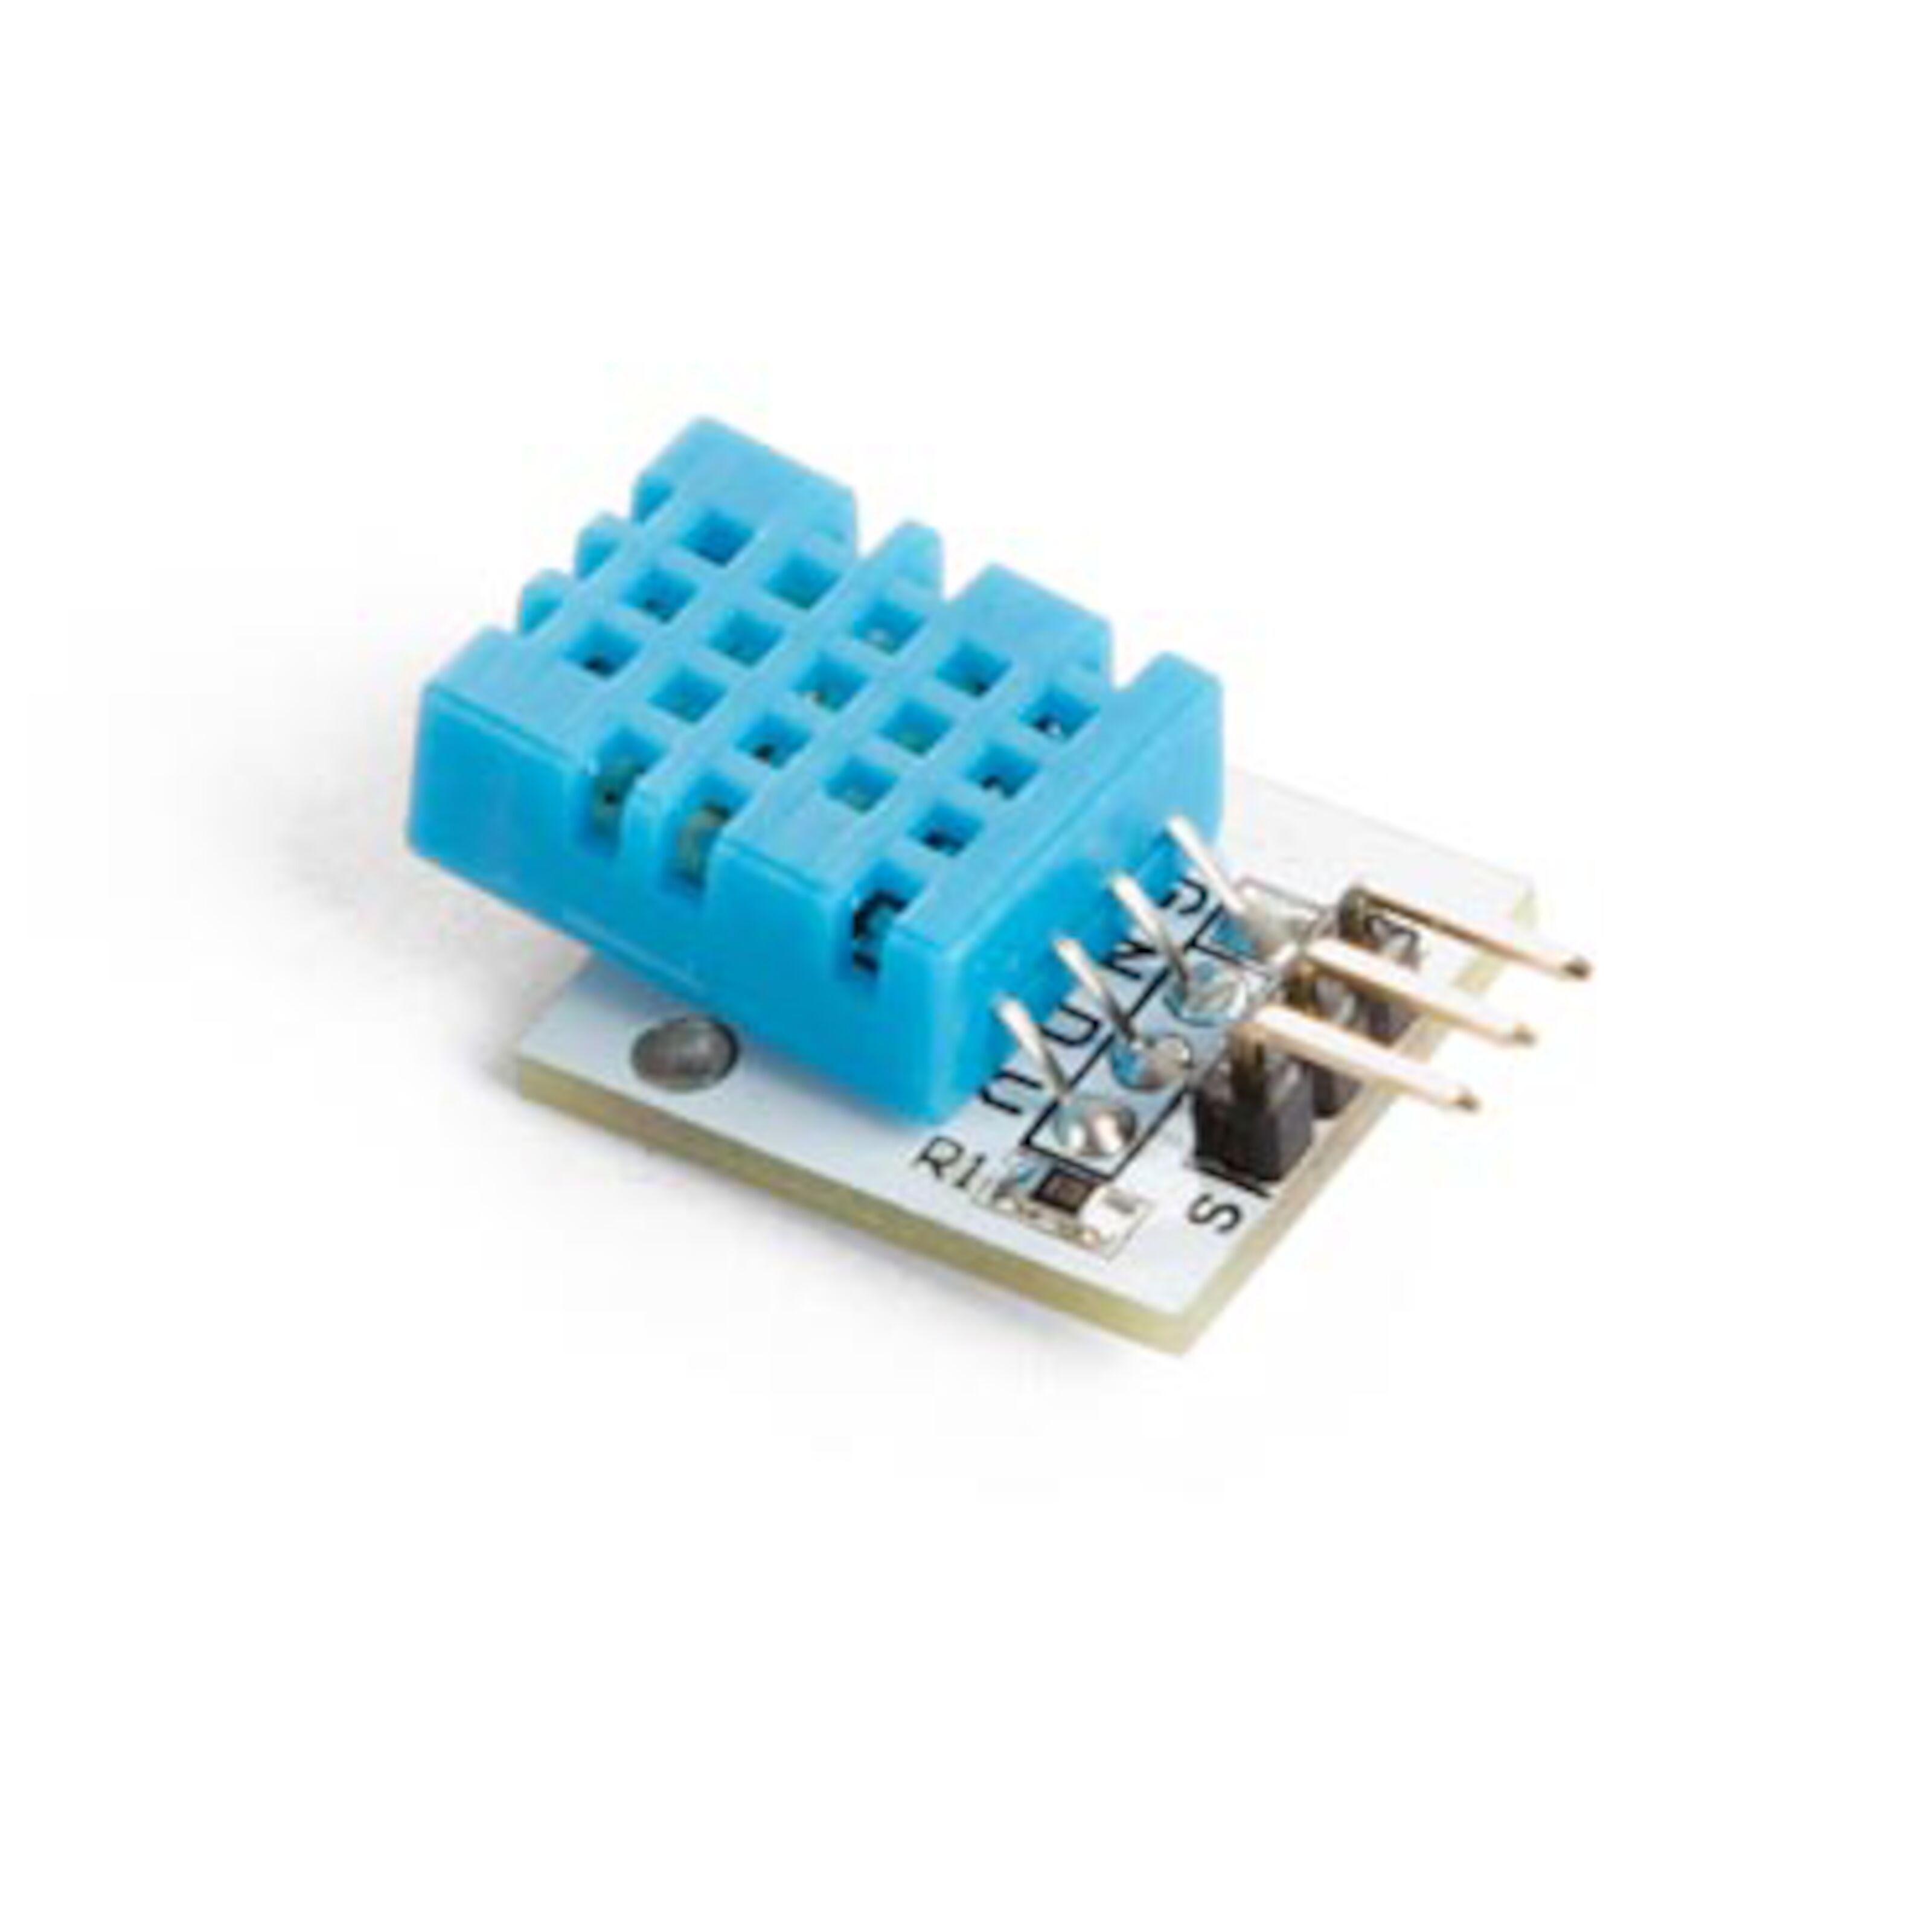 Luxorparts Temperatursensor med kabel for Arduino - Arduino